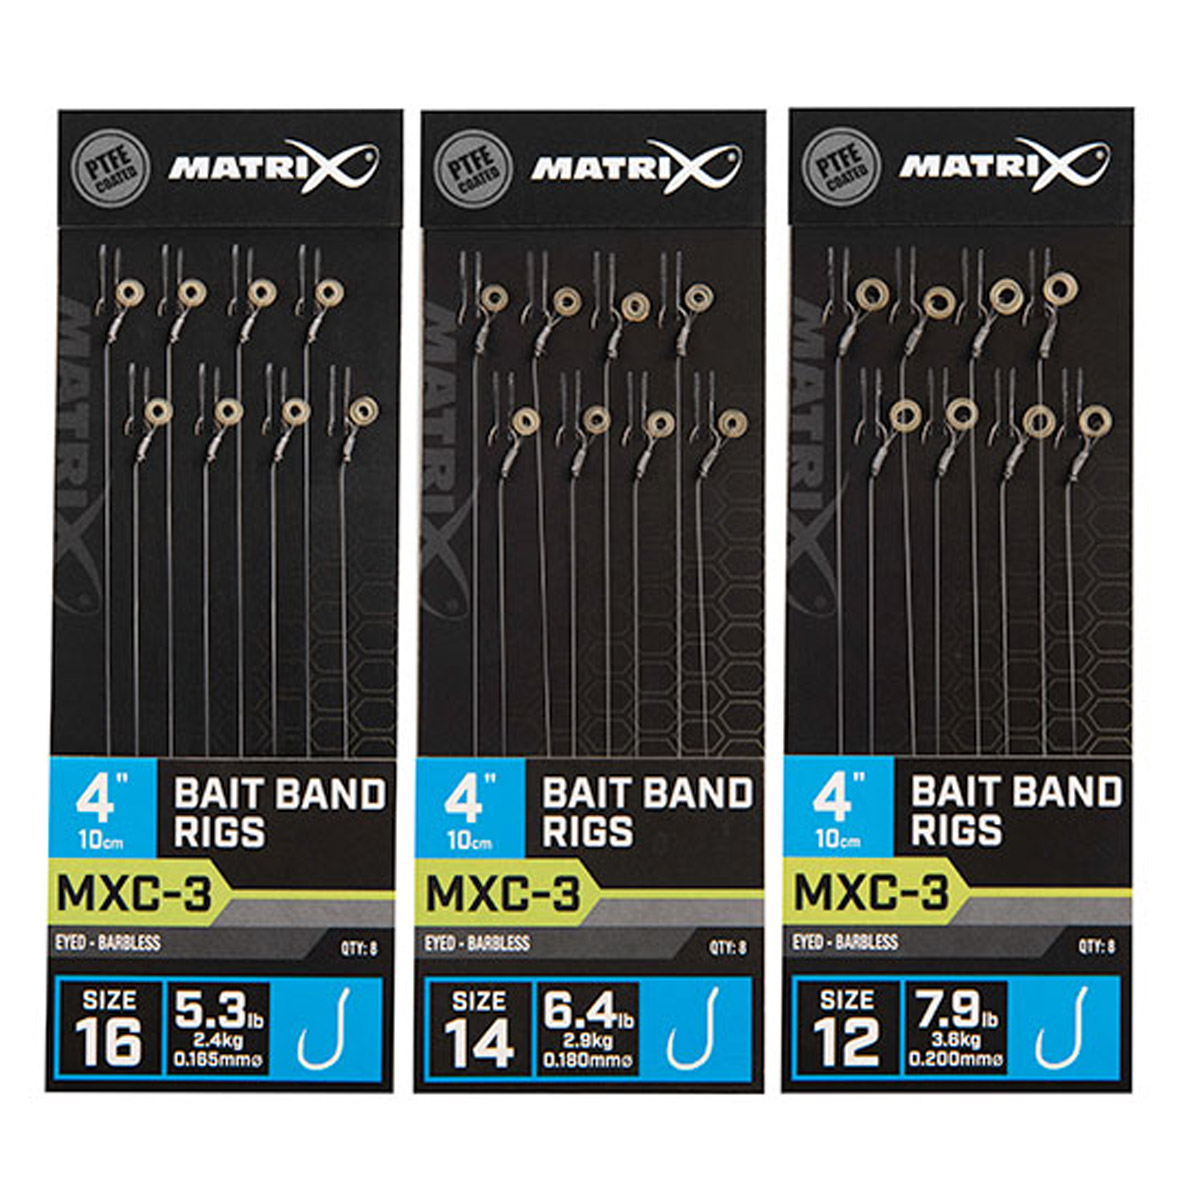 Matrix MXC-3 4" Bait Band Rigs